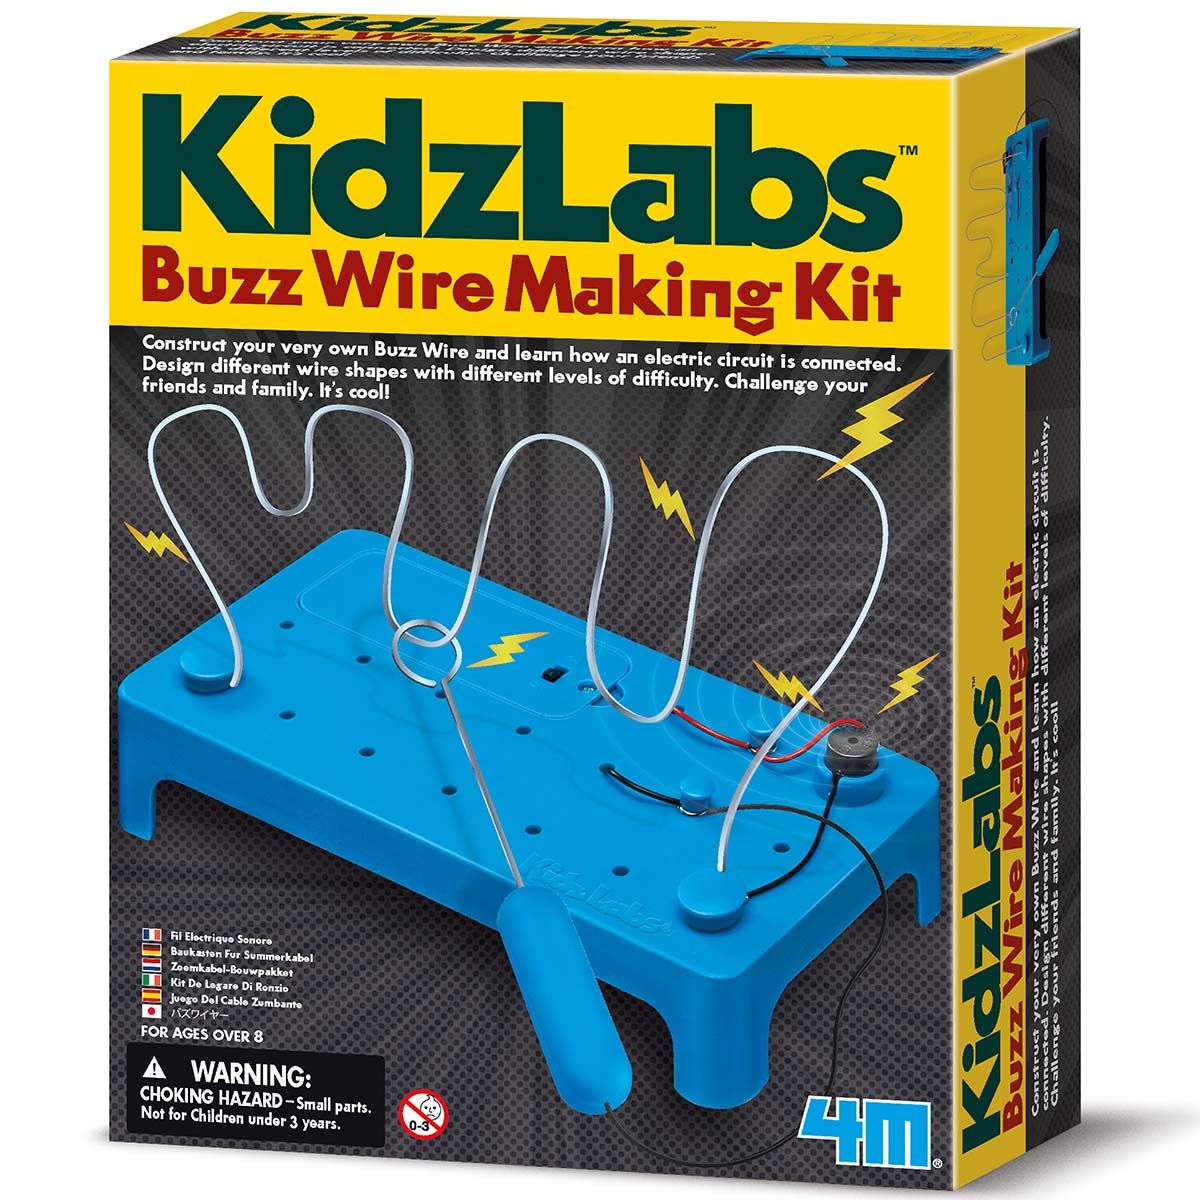 Buzz-Wire Making Kit